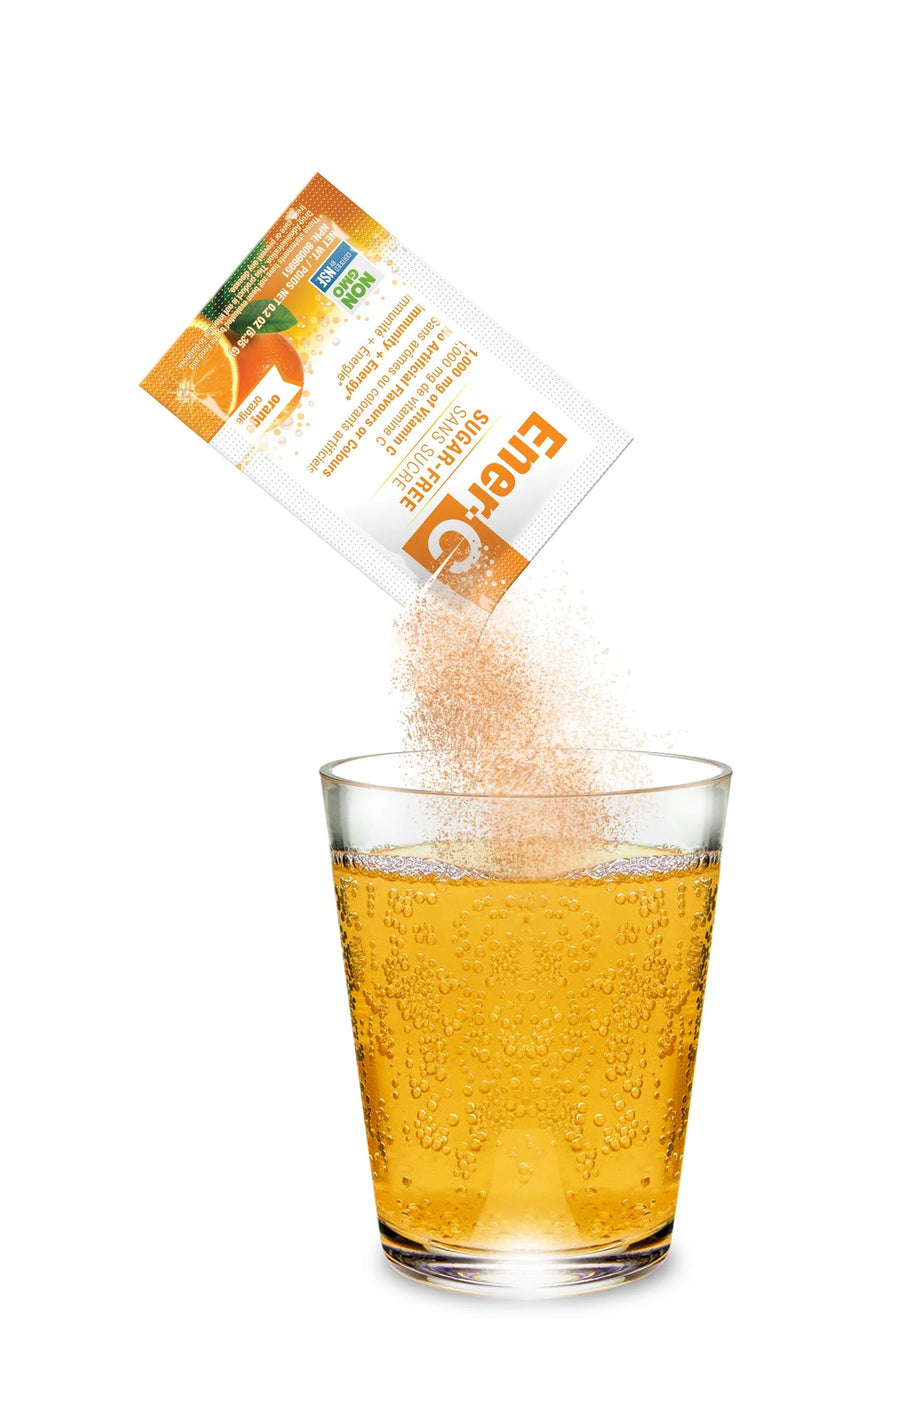 Ener-C Sugar Free Drink Mix 1,000mg of Vitamin C Orange Flavour 30 Packets